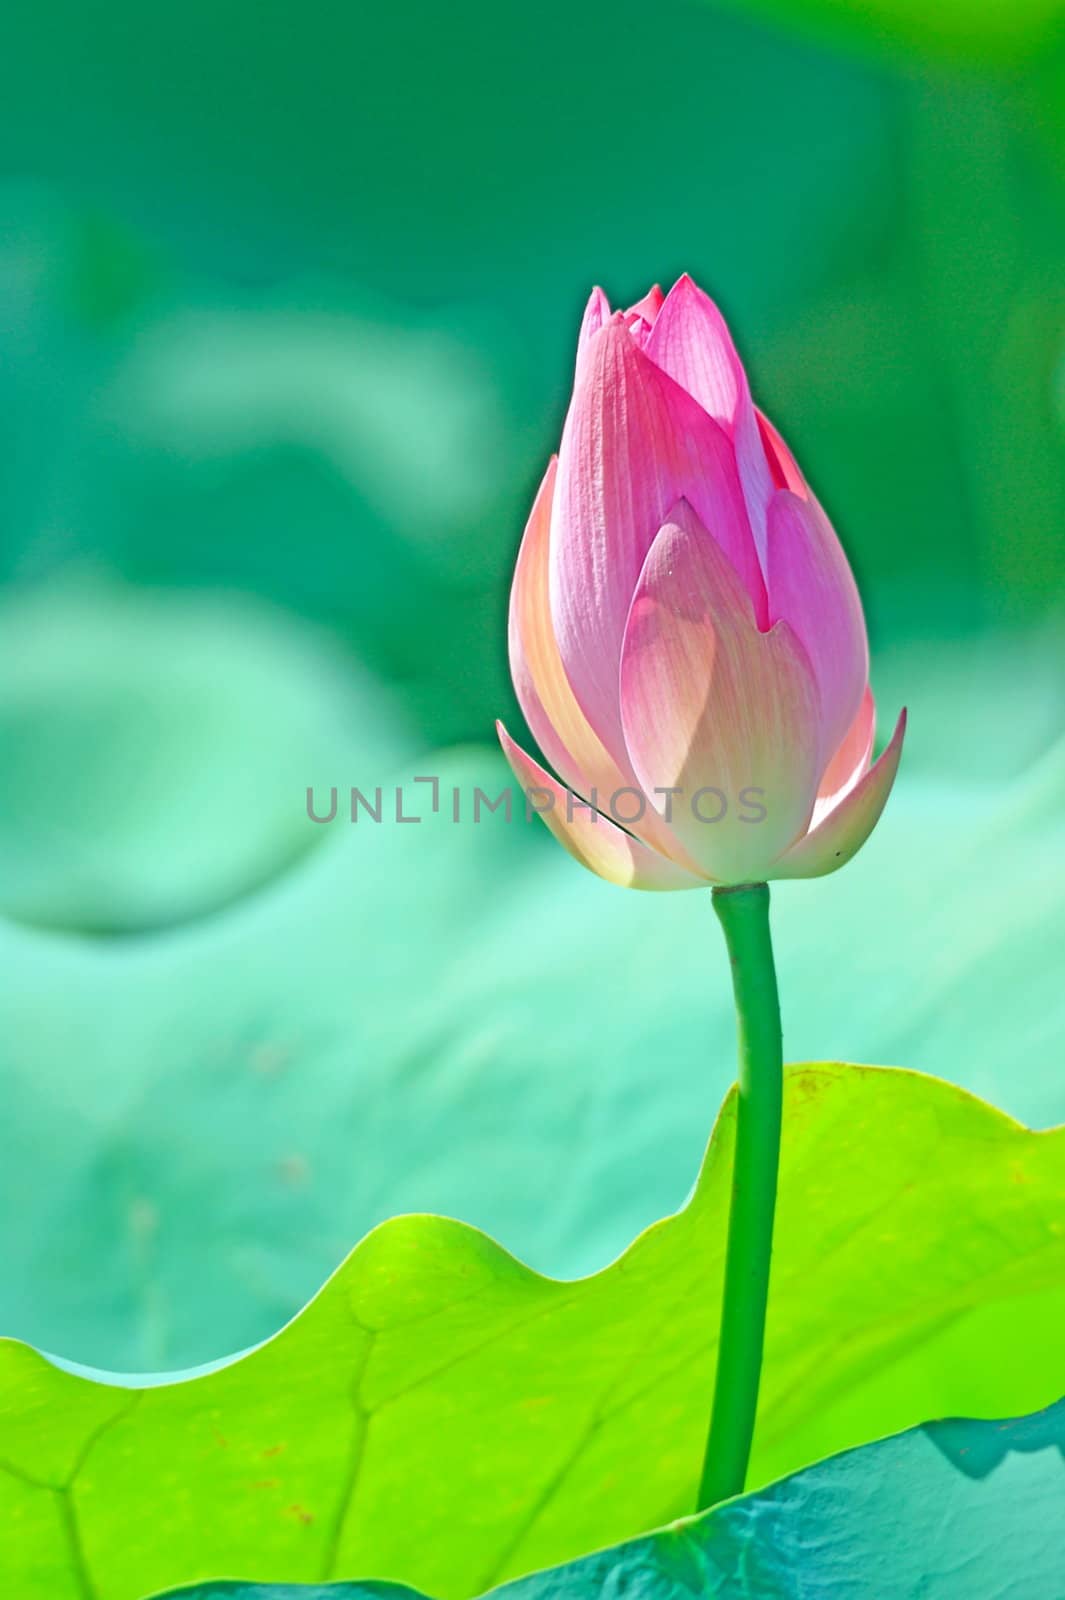 Lotus flower on a green background. Photo taken on: June, 2009